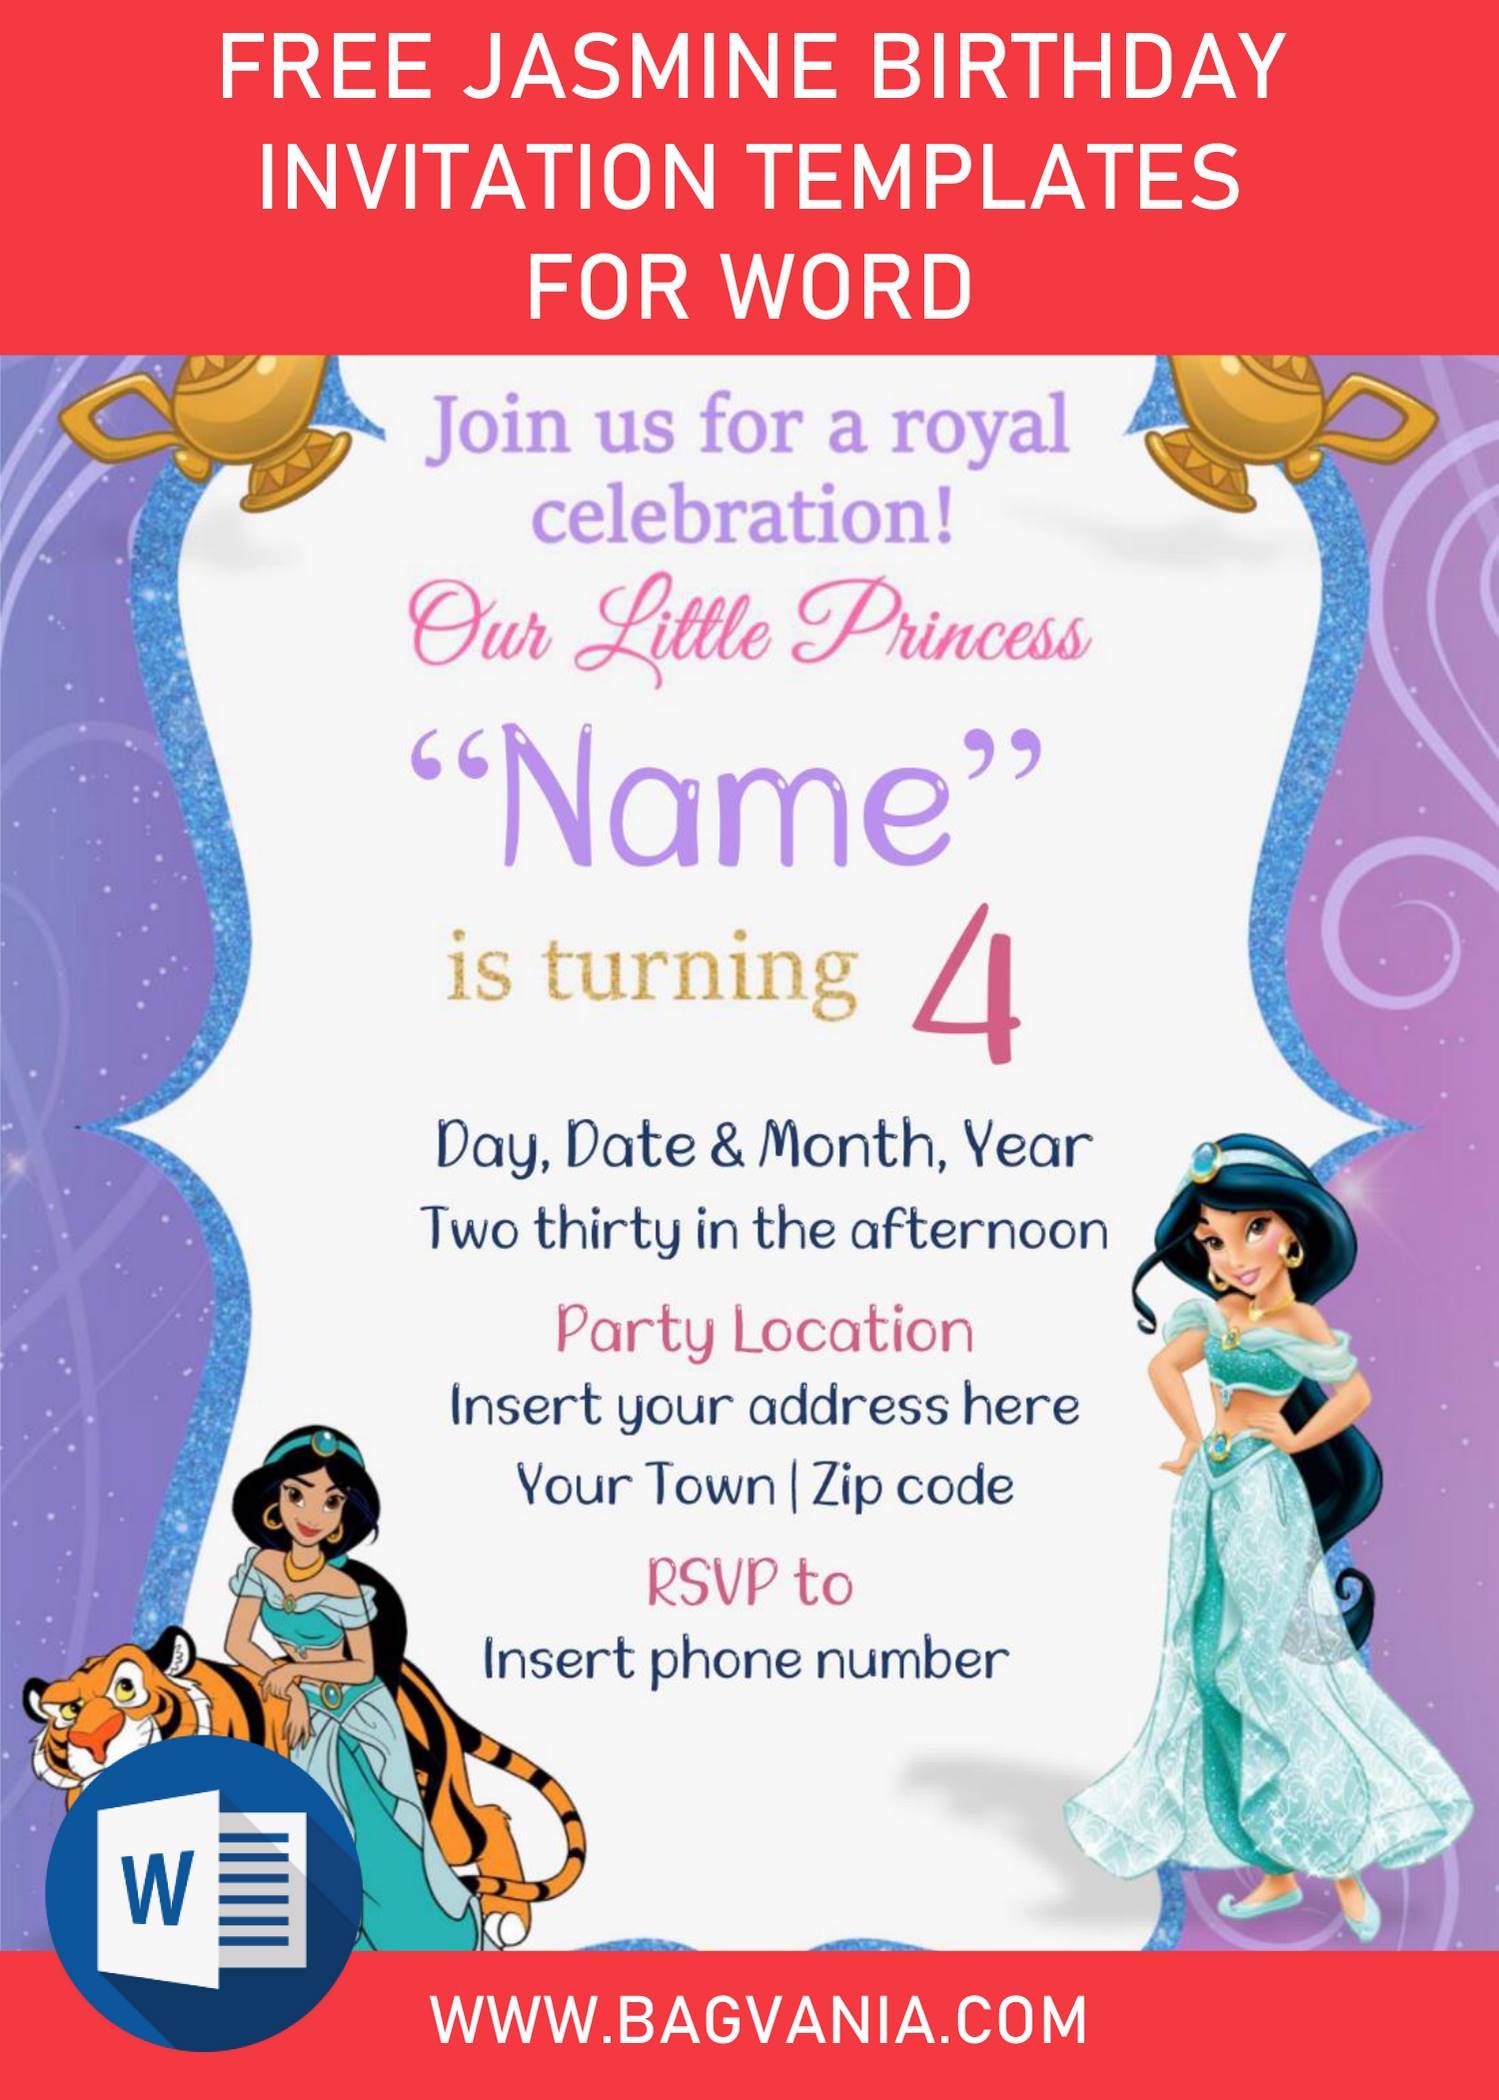 free jasmine birthday invitation templates for word | free